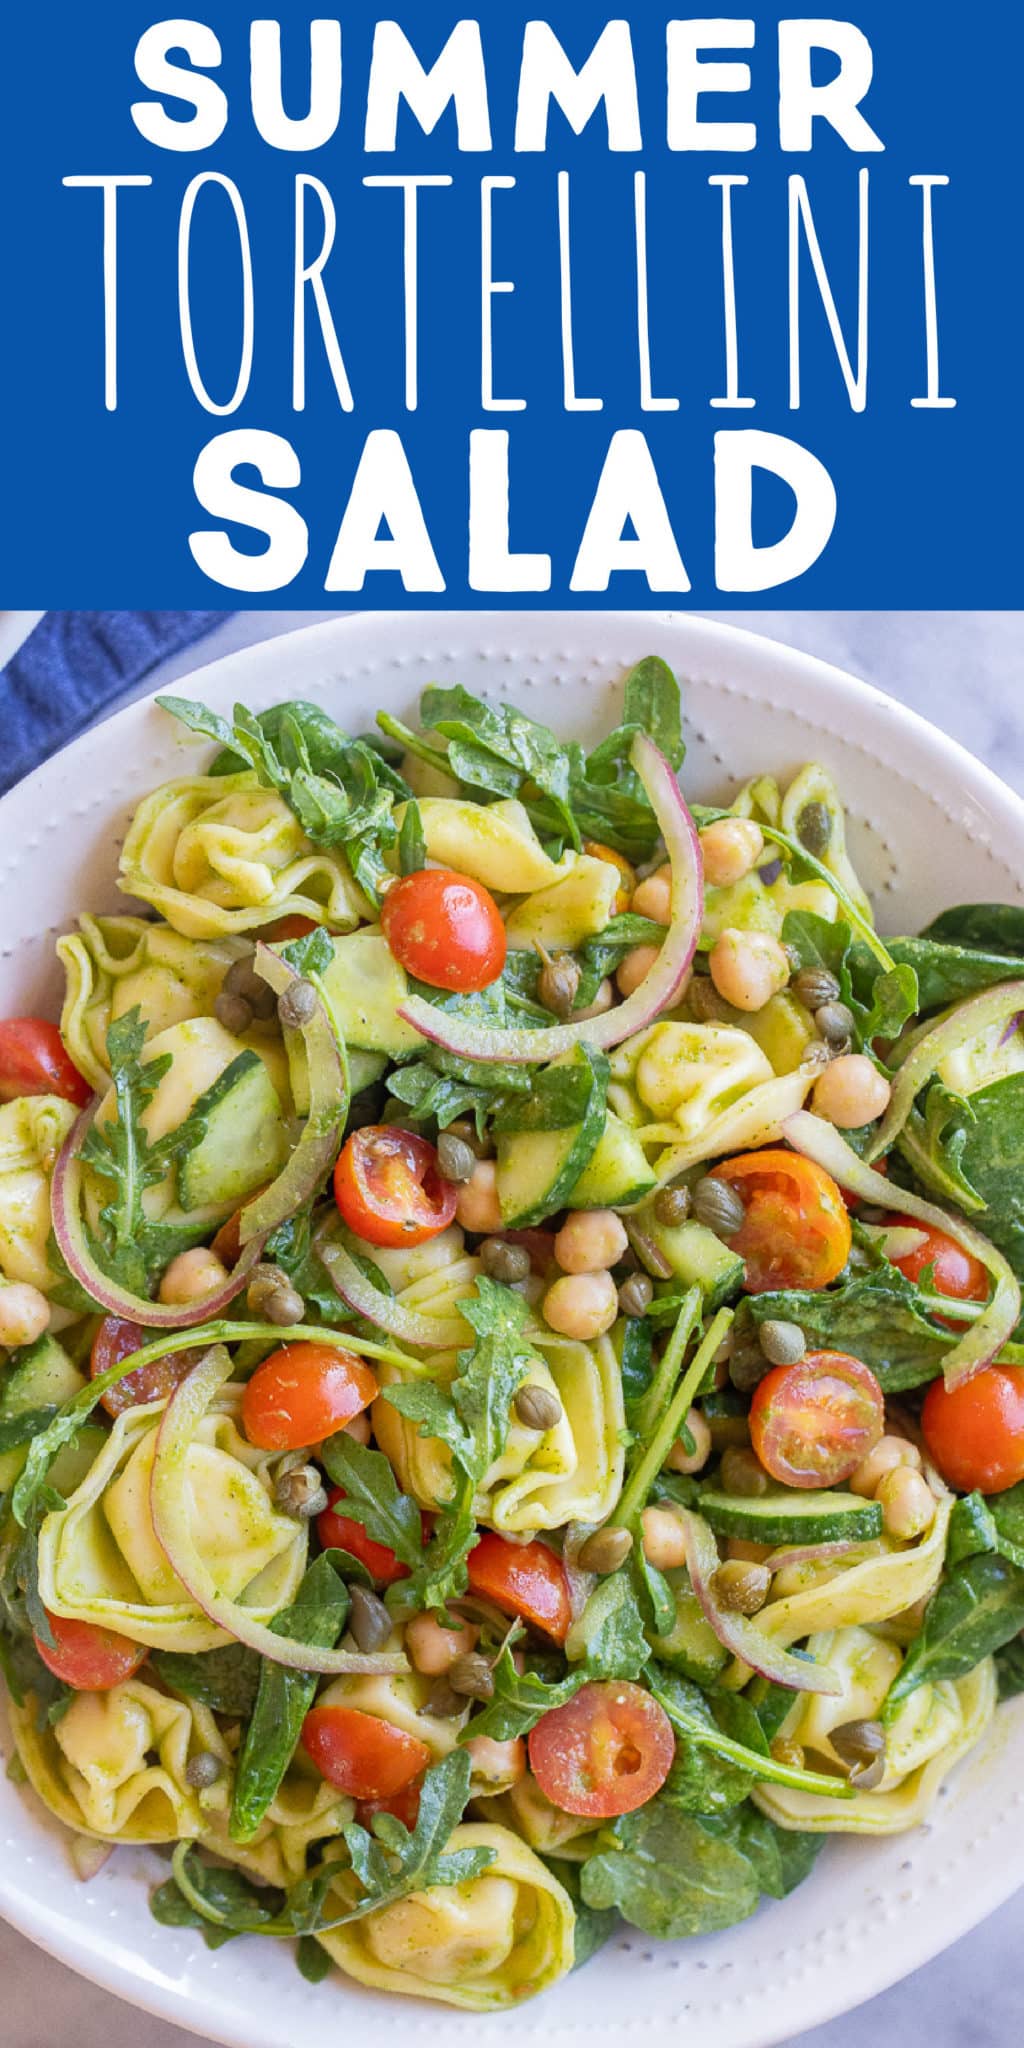 Summer Tortellini Salad with Garlic Herb Dressing - She Likes Food